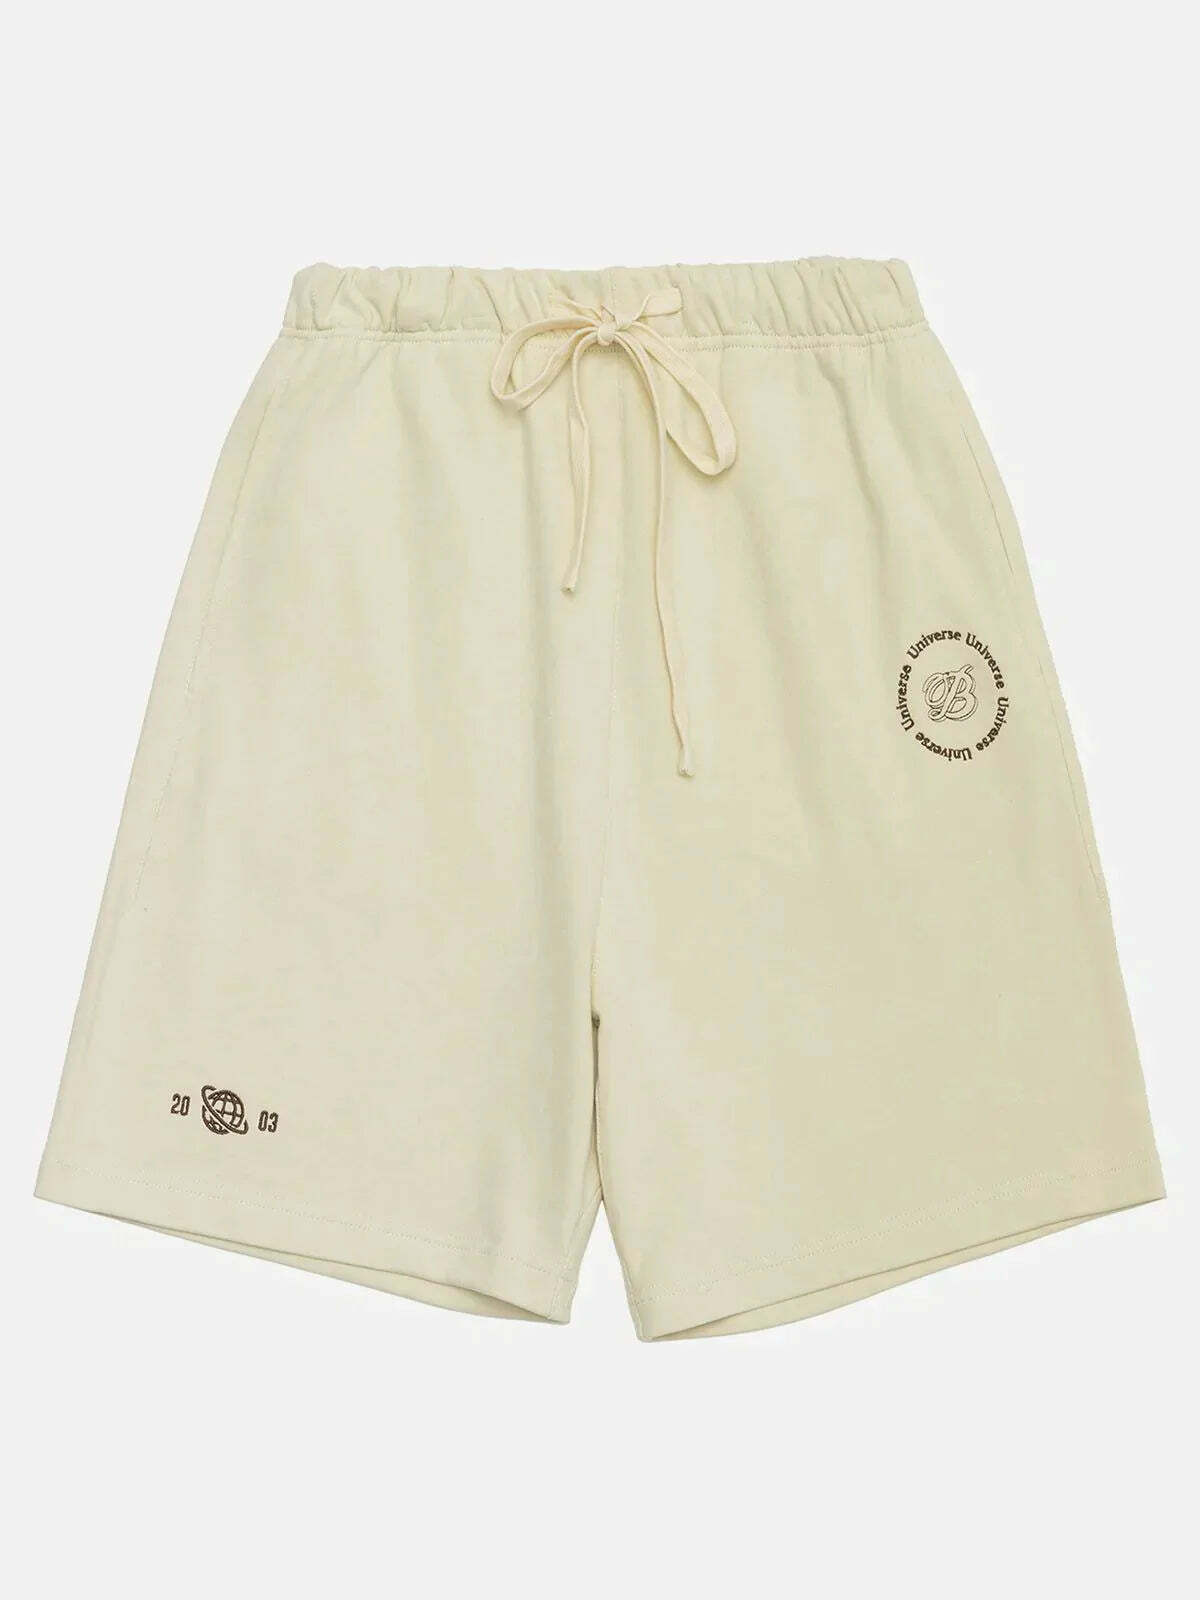 stretch cotton drawstring shorts urban comfort & versatile style 3819